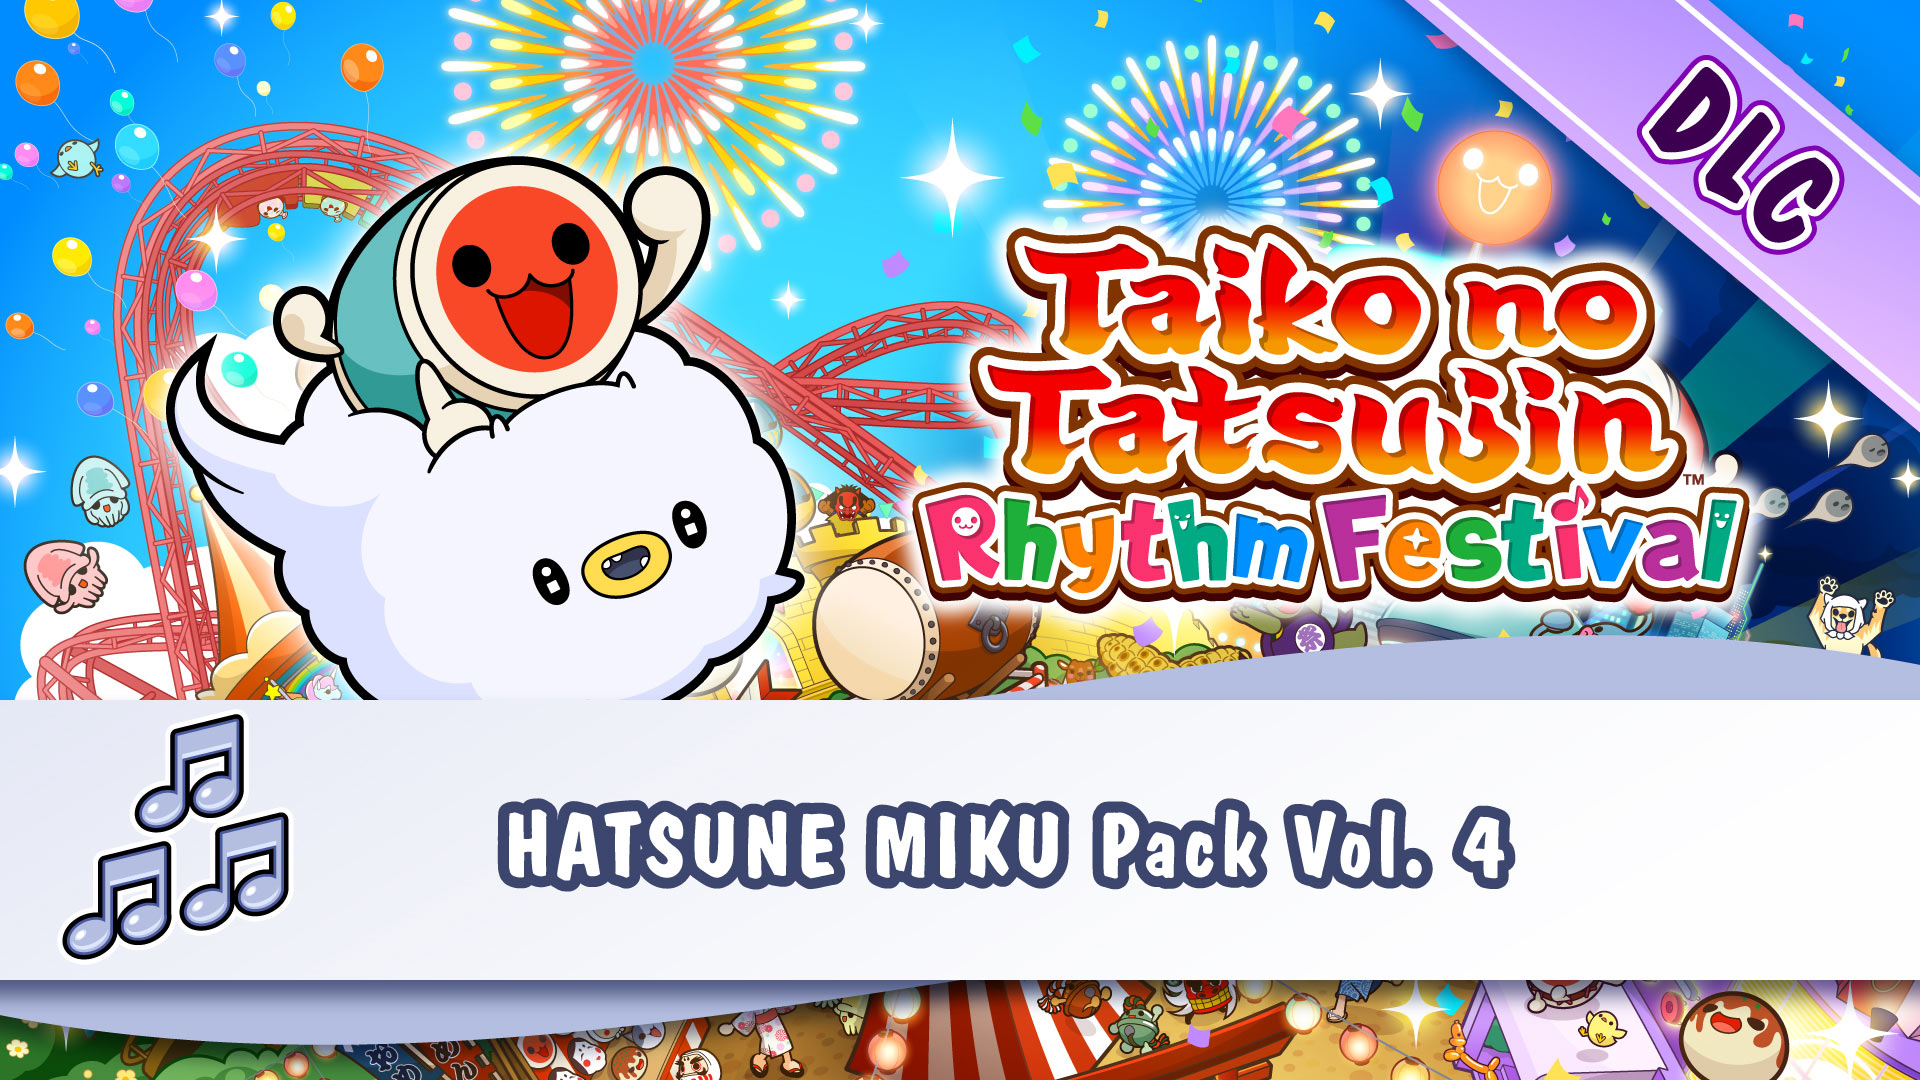 Taiko no Tatsujin: Rhythm Festival HATSUNE MIKU Pack Vol. 4